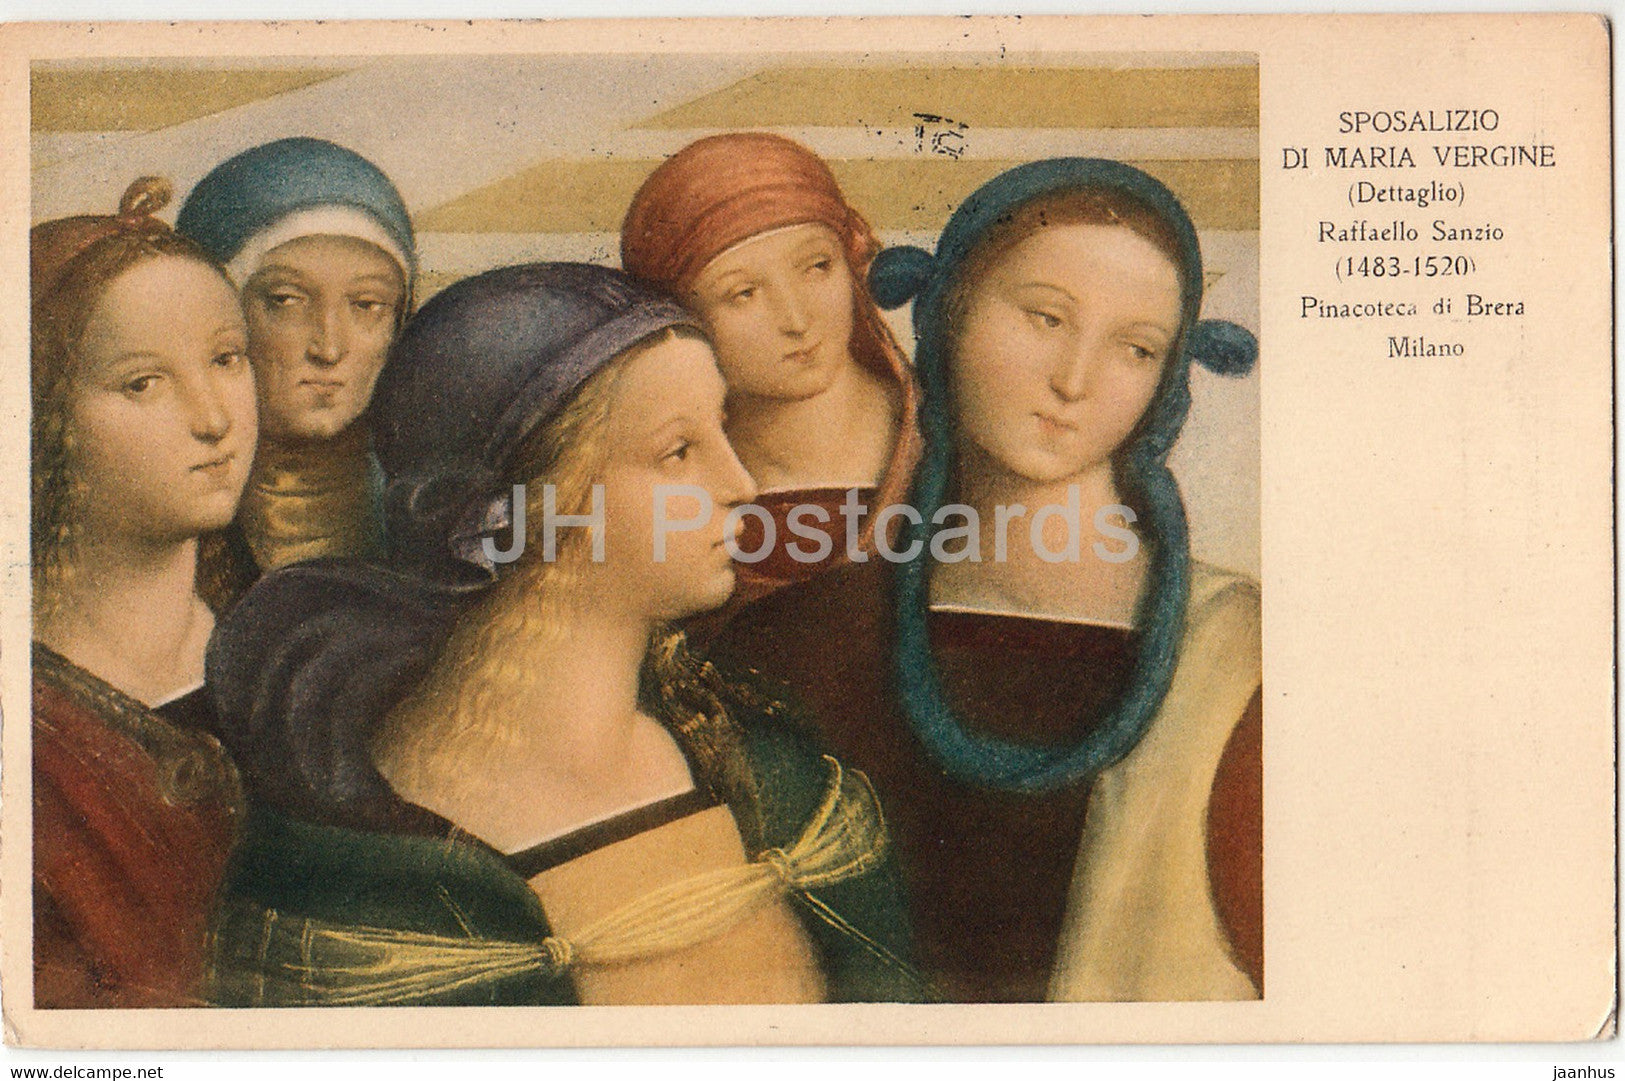 painting by Raphael - Sposalizio di Maria Vergine - Virgin Mary - Italian art - old postcard - 1931 - Italy - used - JH Postcards